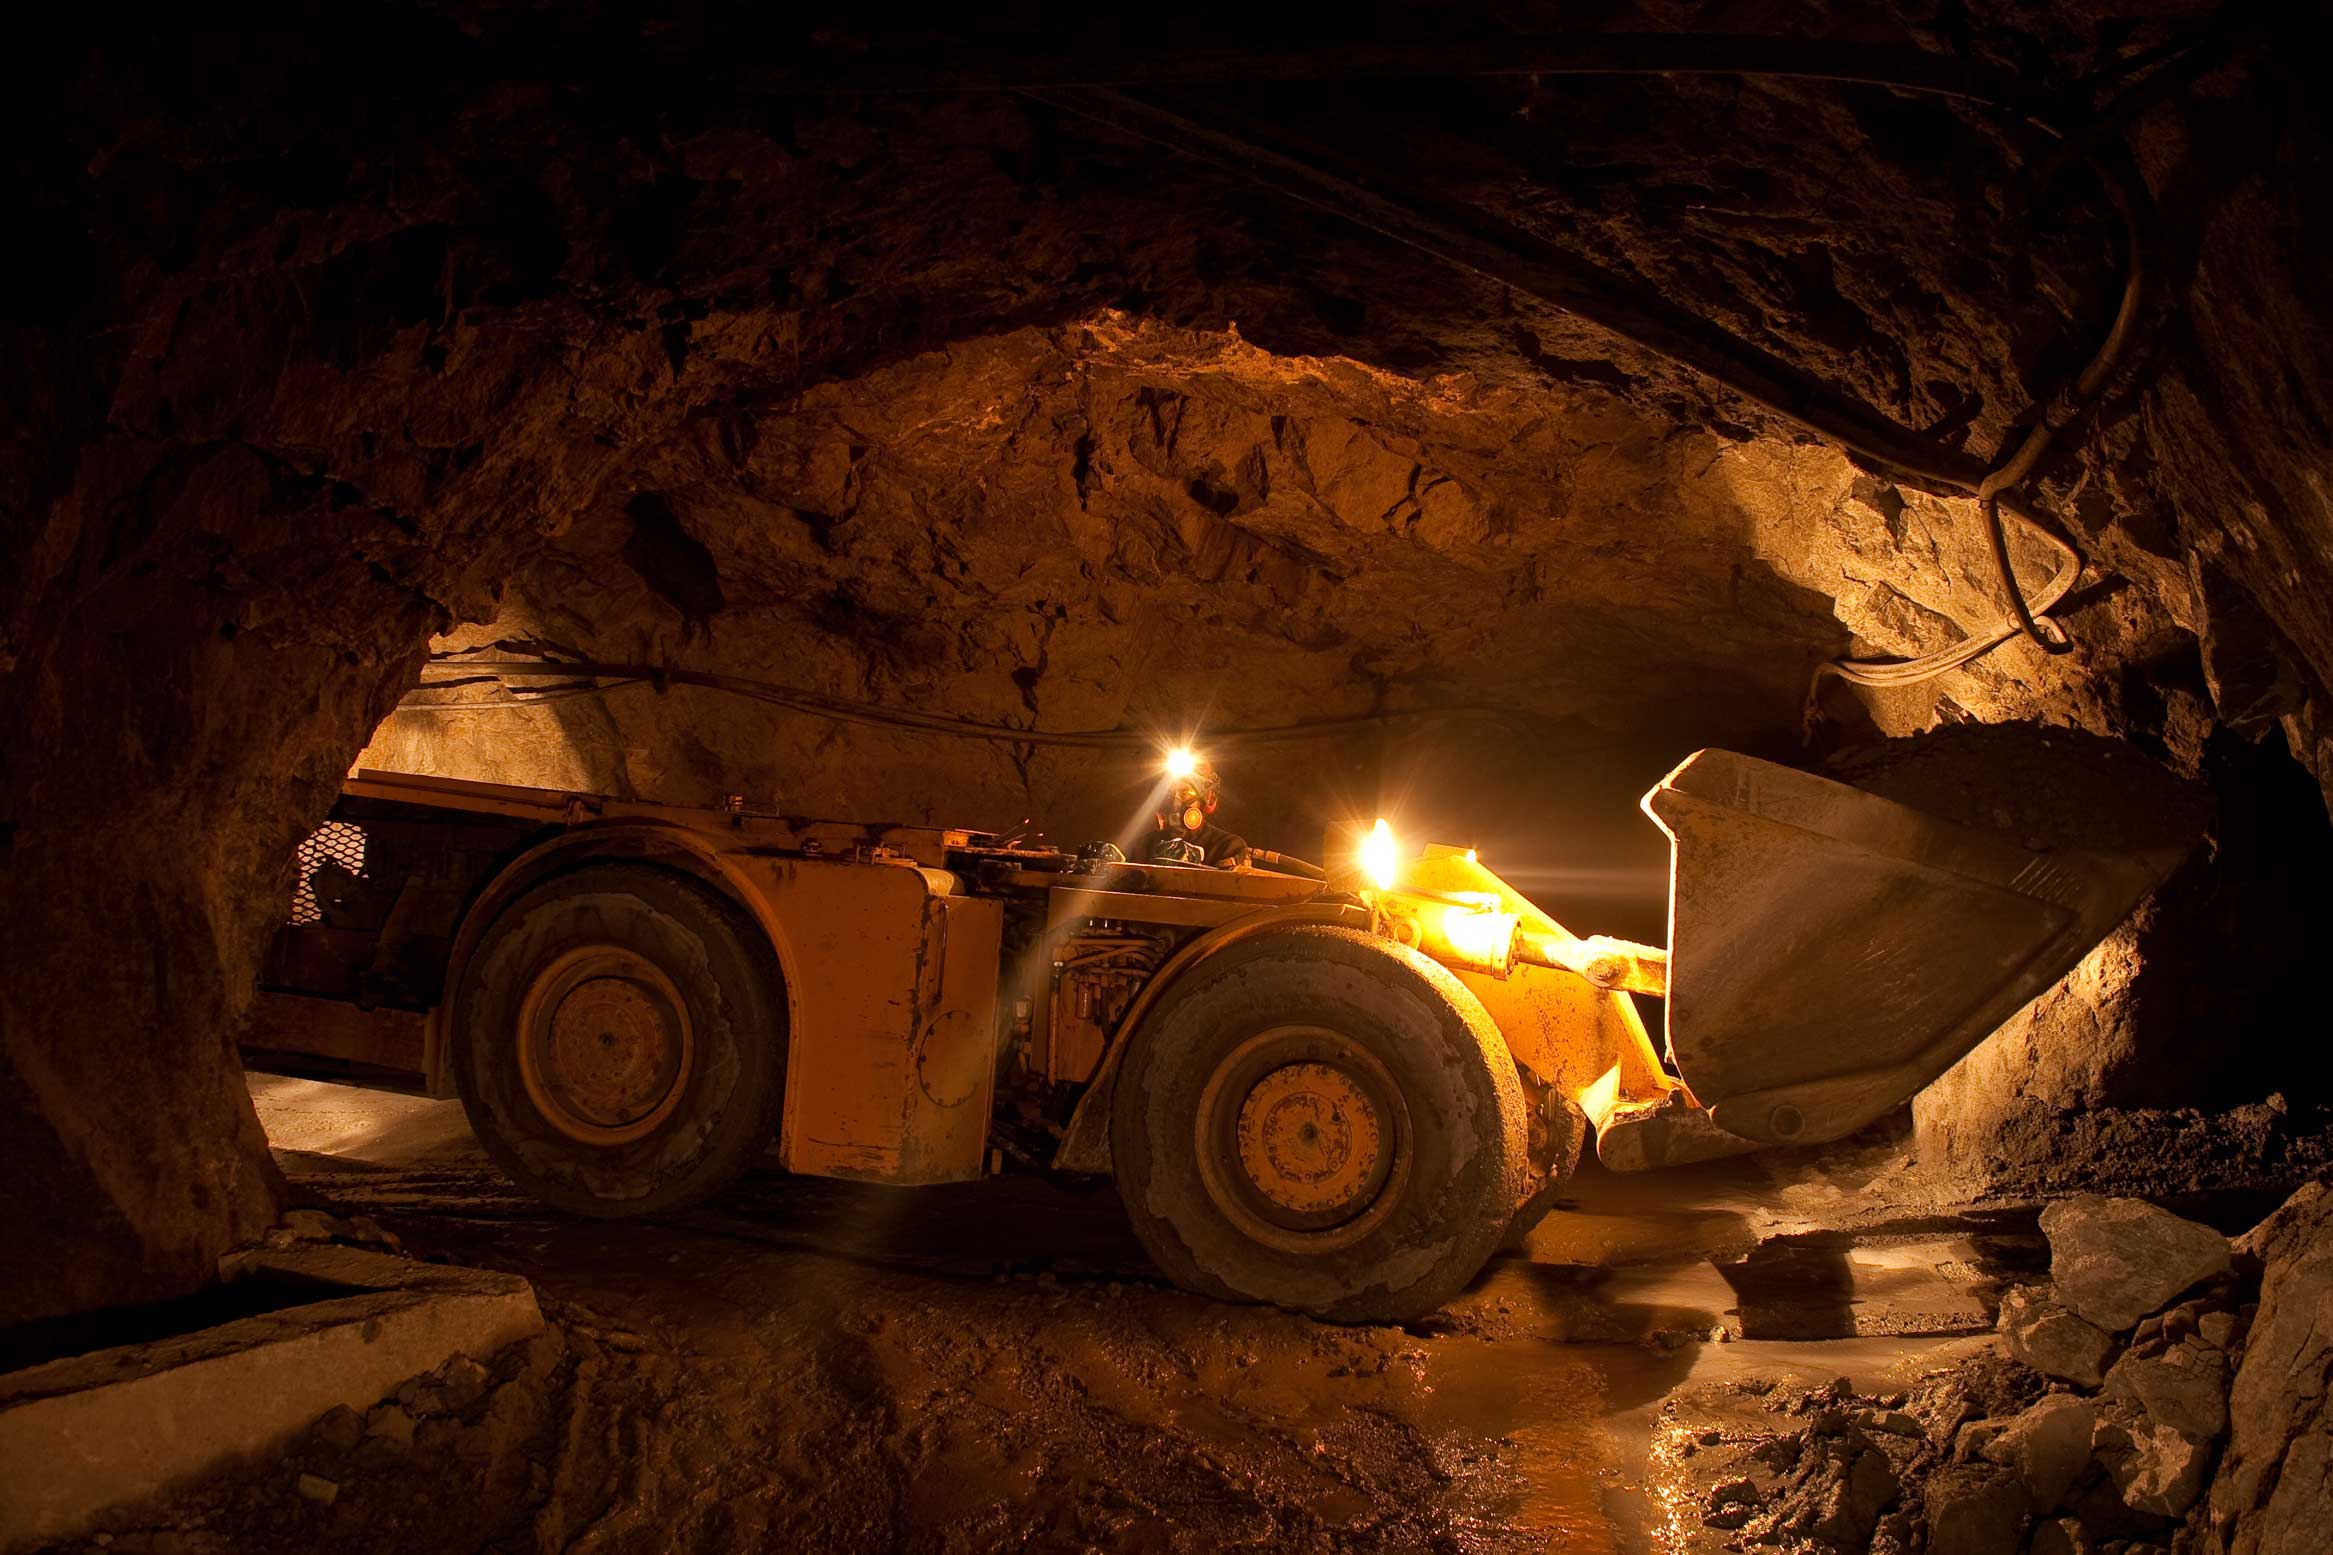 Deep inside a Guanajuato mine.